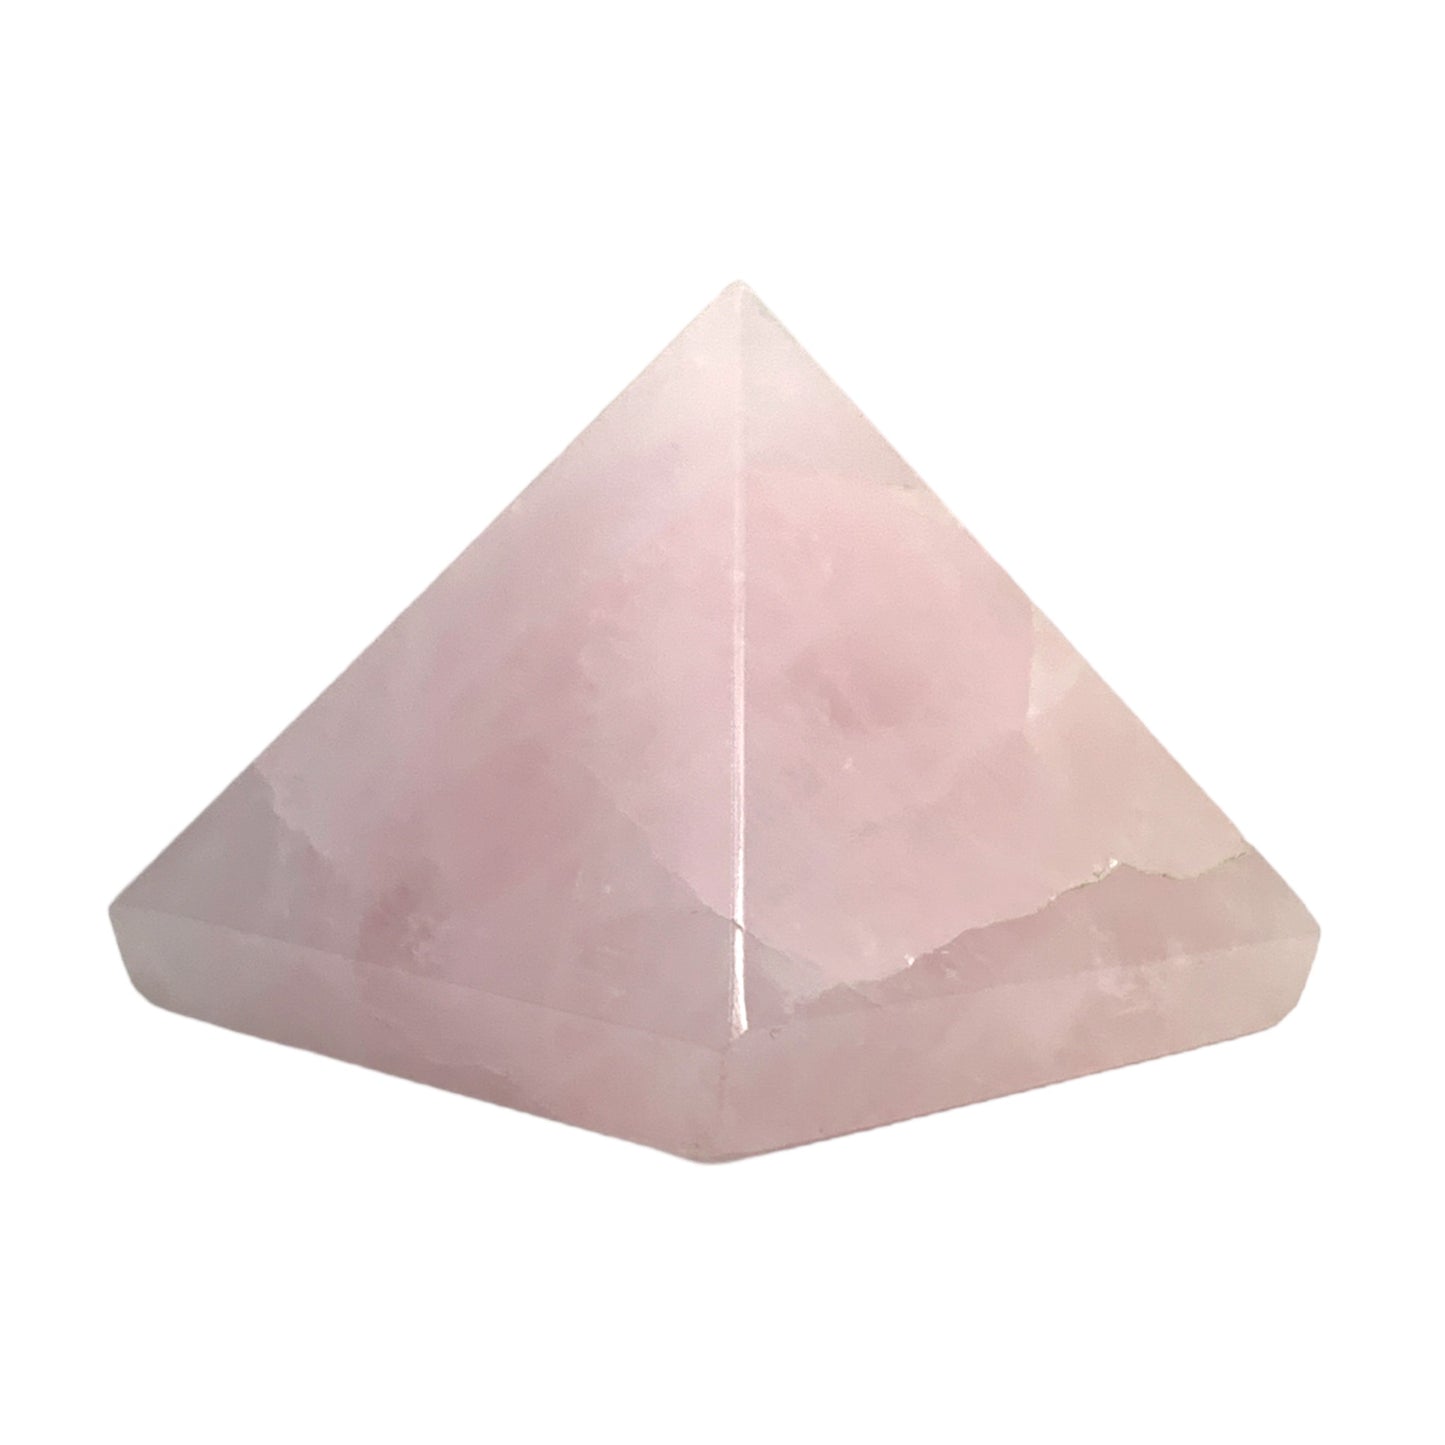 Rose Quartz - Pyramids - 35 to 70mm - Price per gram per piece (B2B ordering 1 = 1 piece so we charge Ex. 60g = $7.20 each)